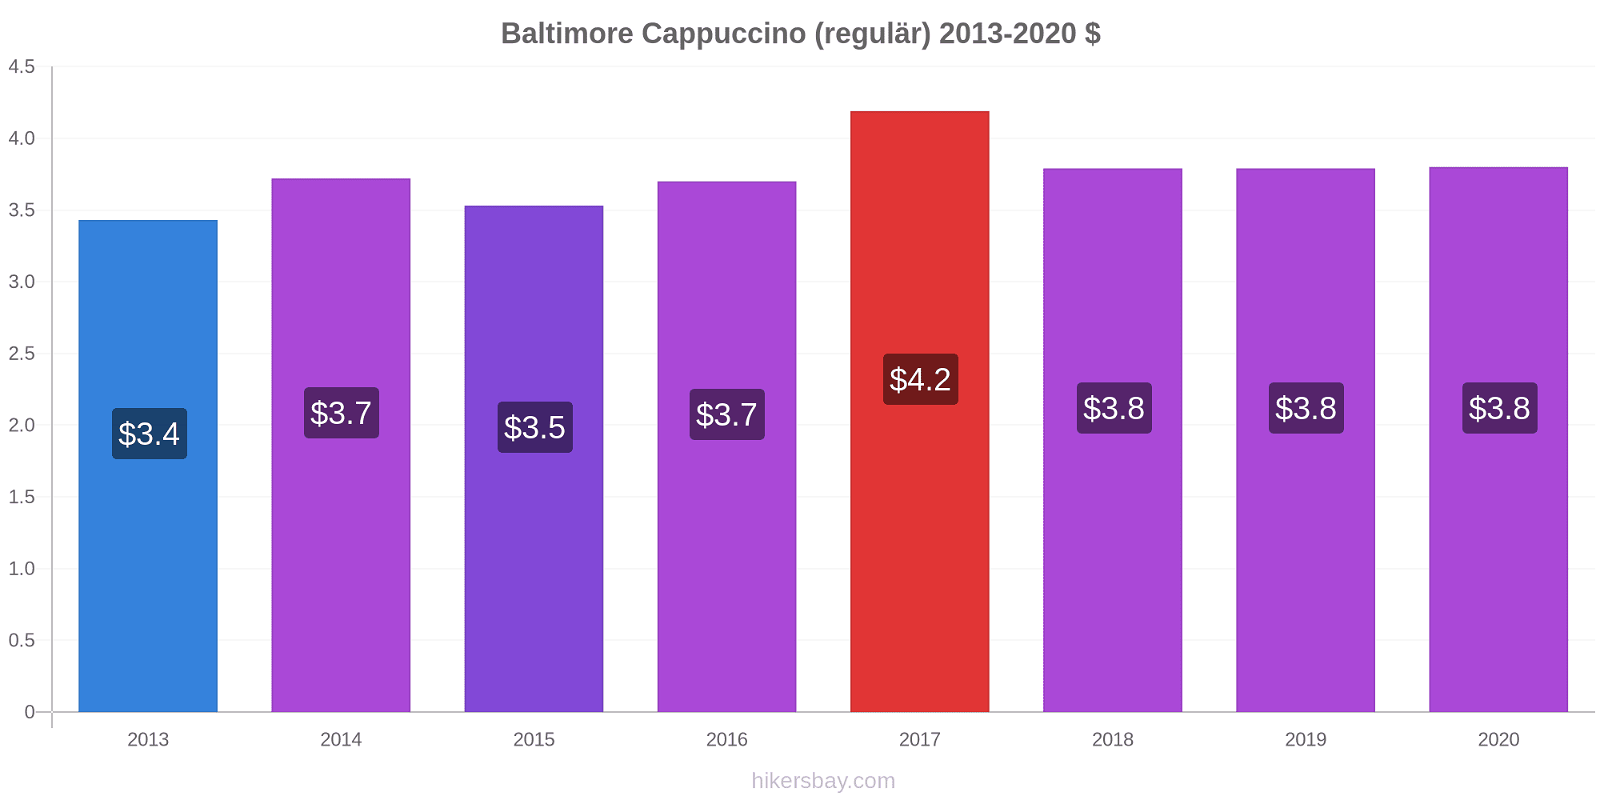 Baltimore Preisänderungen Cappuccino (regulär) hikersbay.com